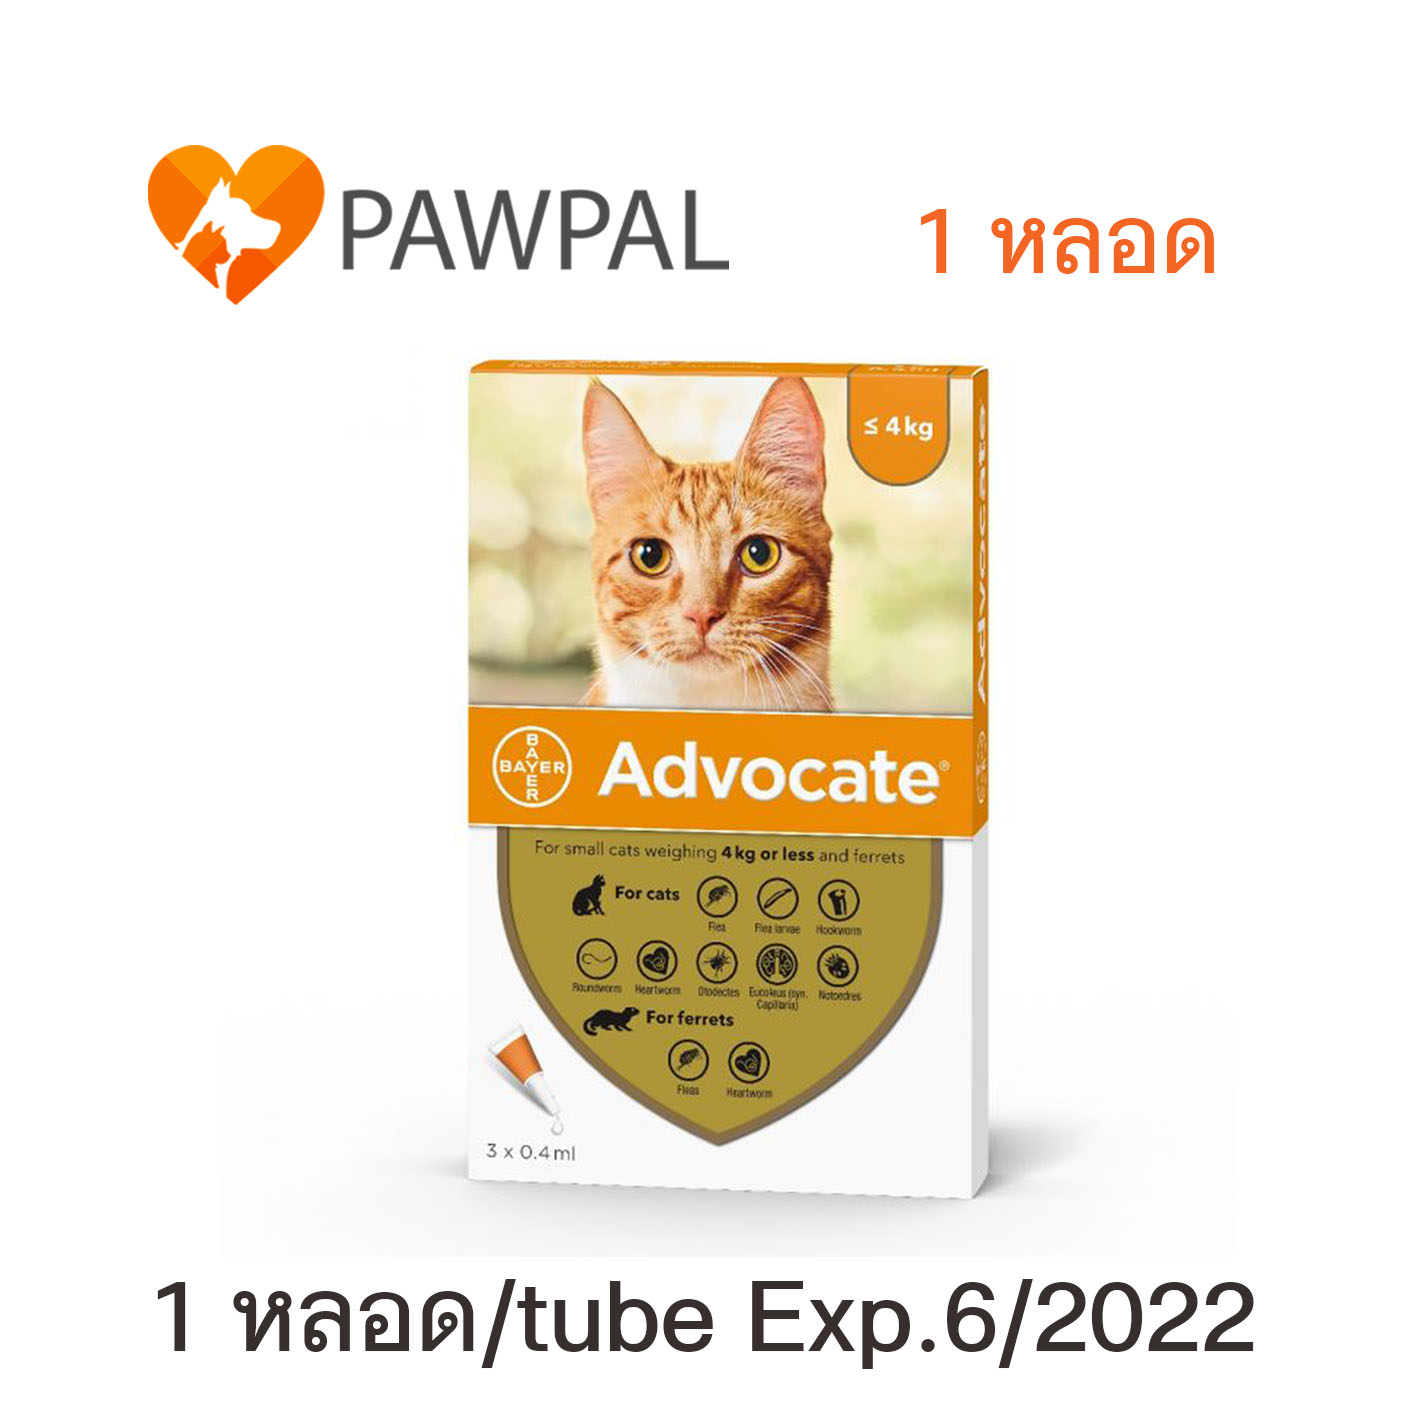 Advocateแอทโวเคท Bayer แมว ลูกแมว 0-4 kg Exp.6/2022 หยดหลังคอ หยอดหลัง สีส้ม Spot on Solution cat kitten (1 หลอด/tube)